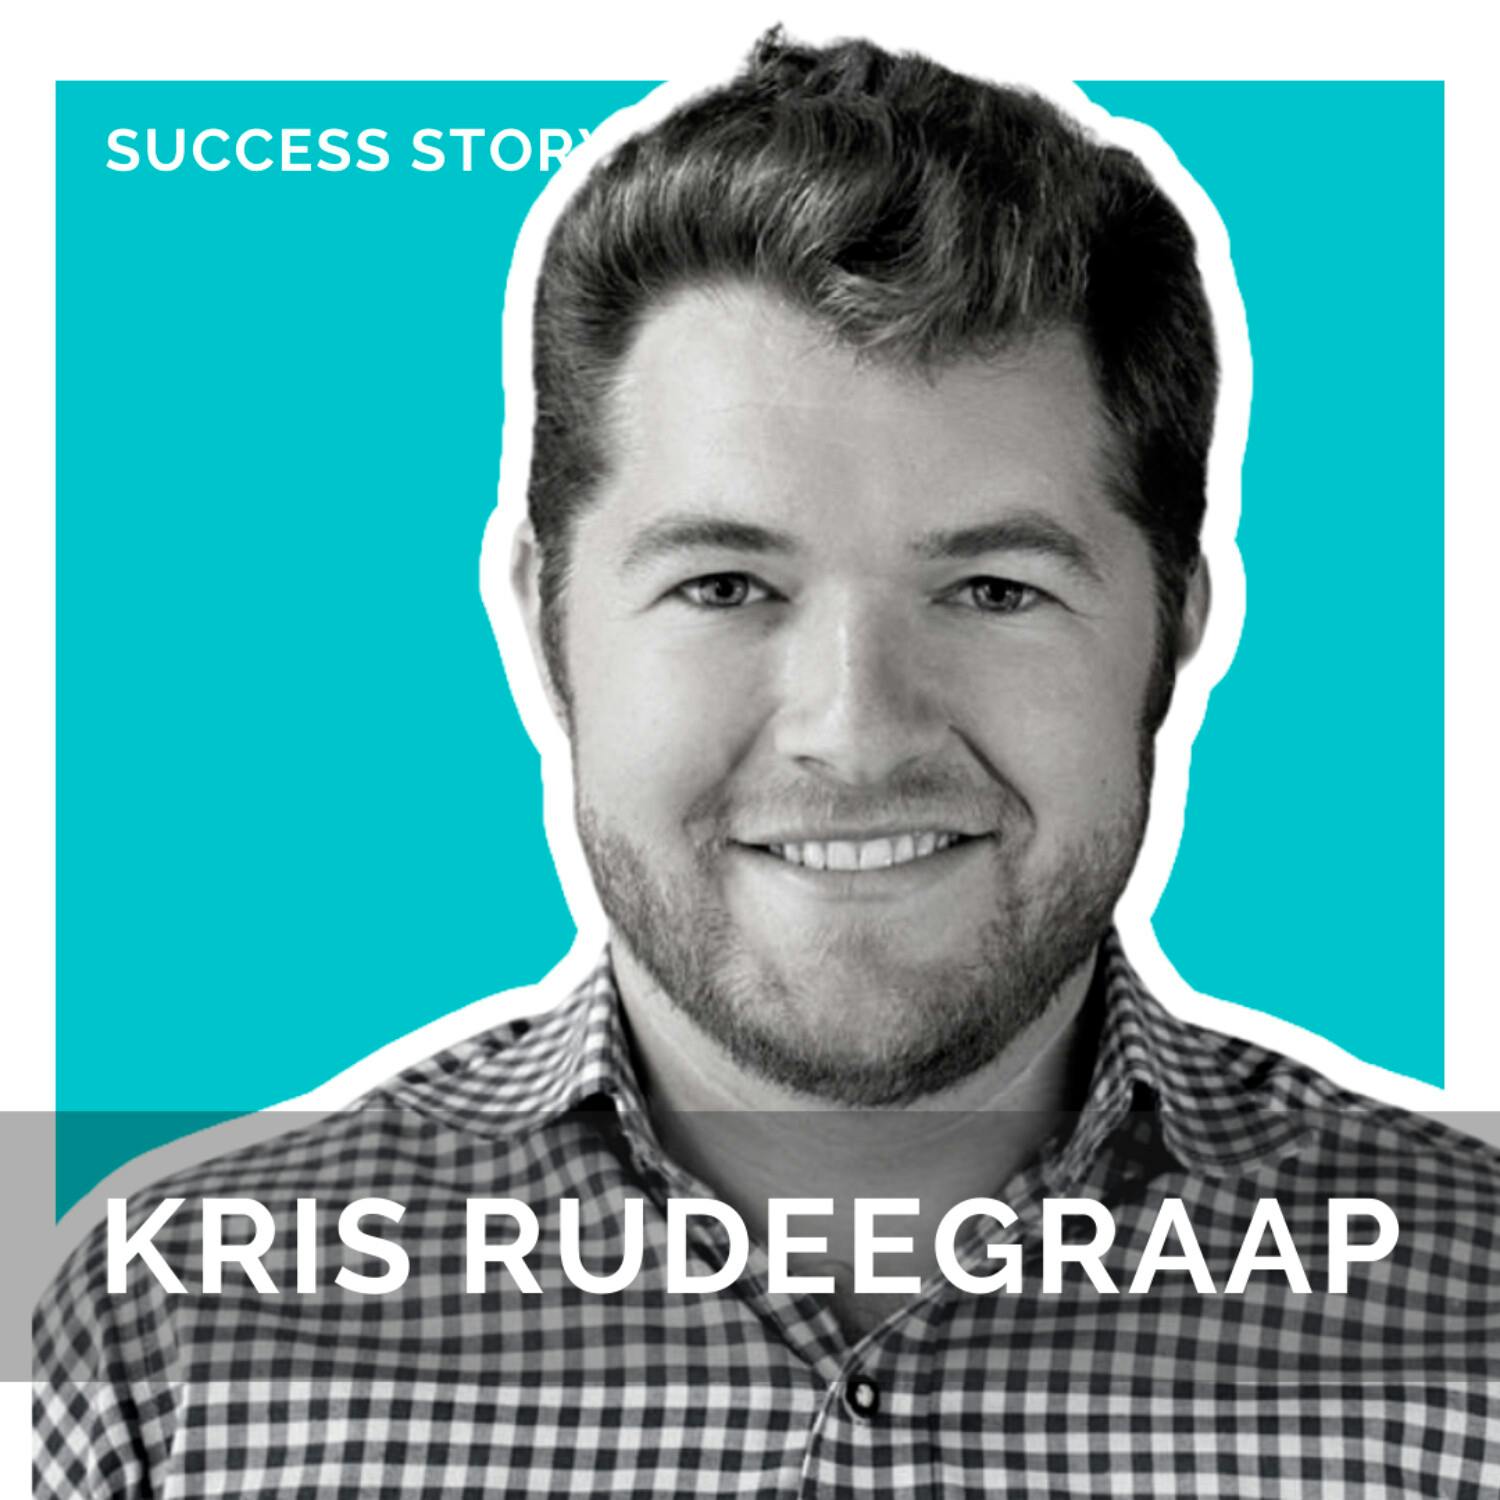 Kris Rudeegraap, Founder & CEO of Sendoso | How to Fuel Revenue & Drive Modern Sales